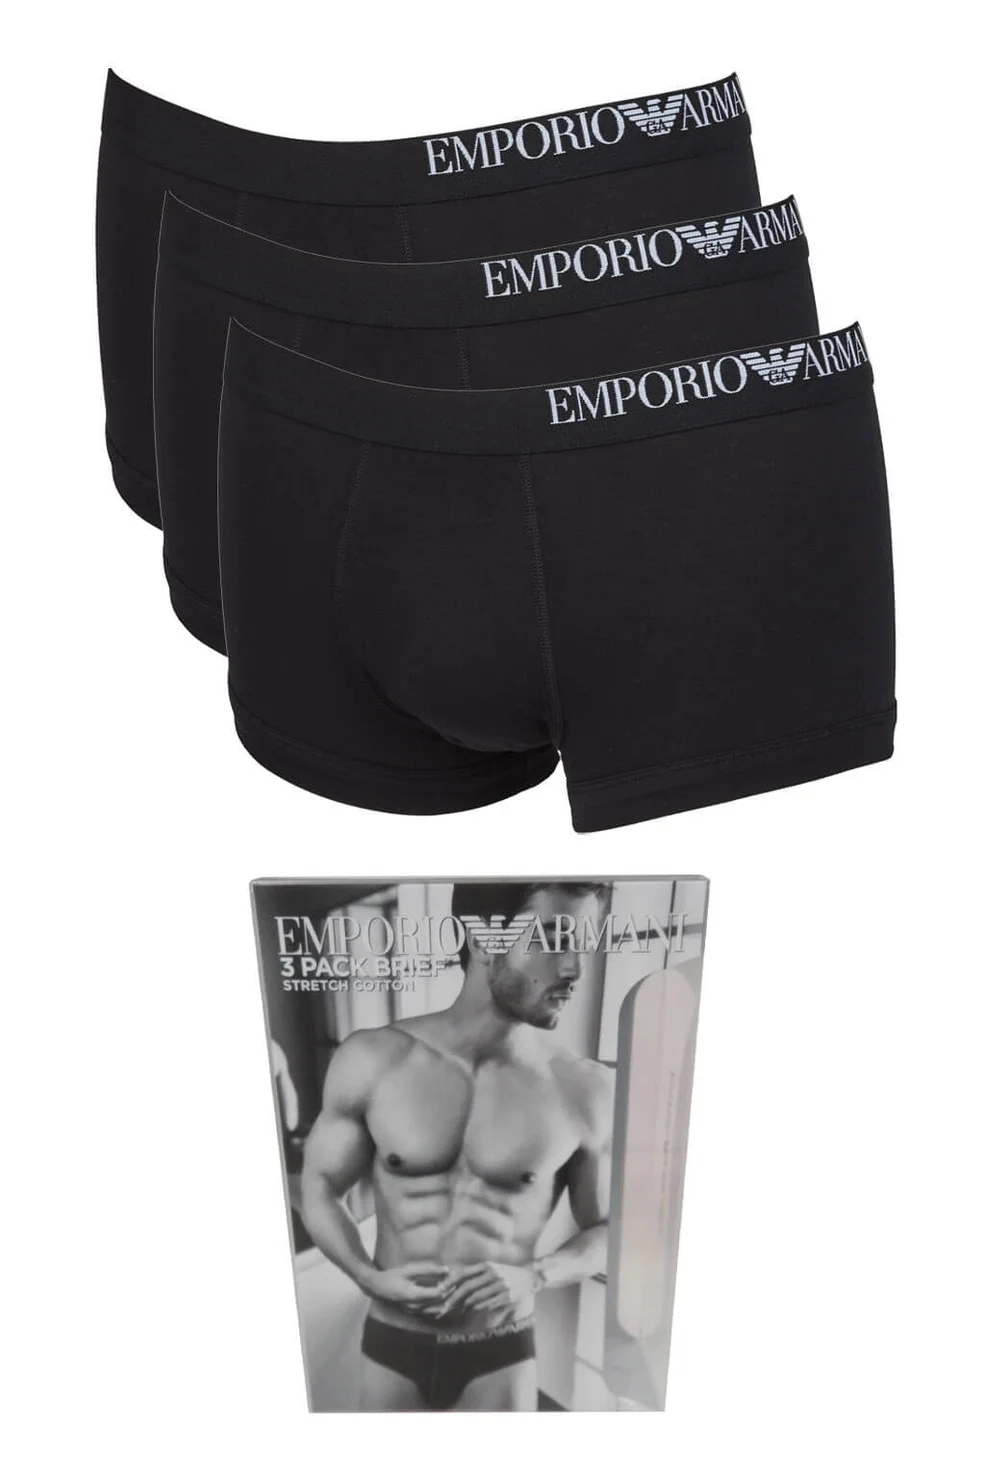 Emporio Armani Men's 3 Pack Side Logo Trunk Boxer Shorts - Black Image 1